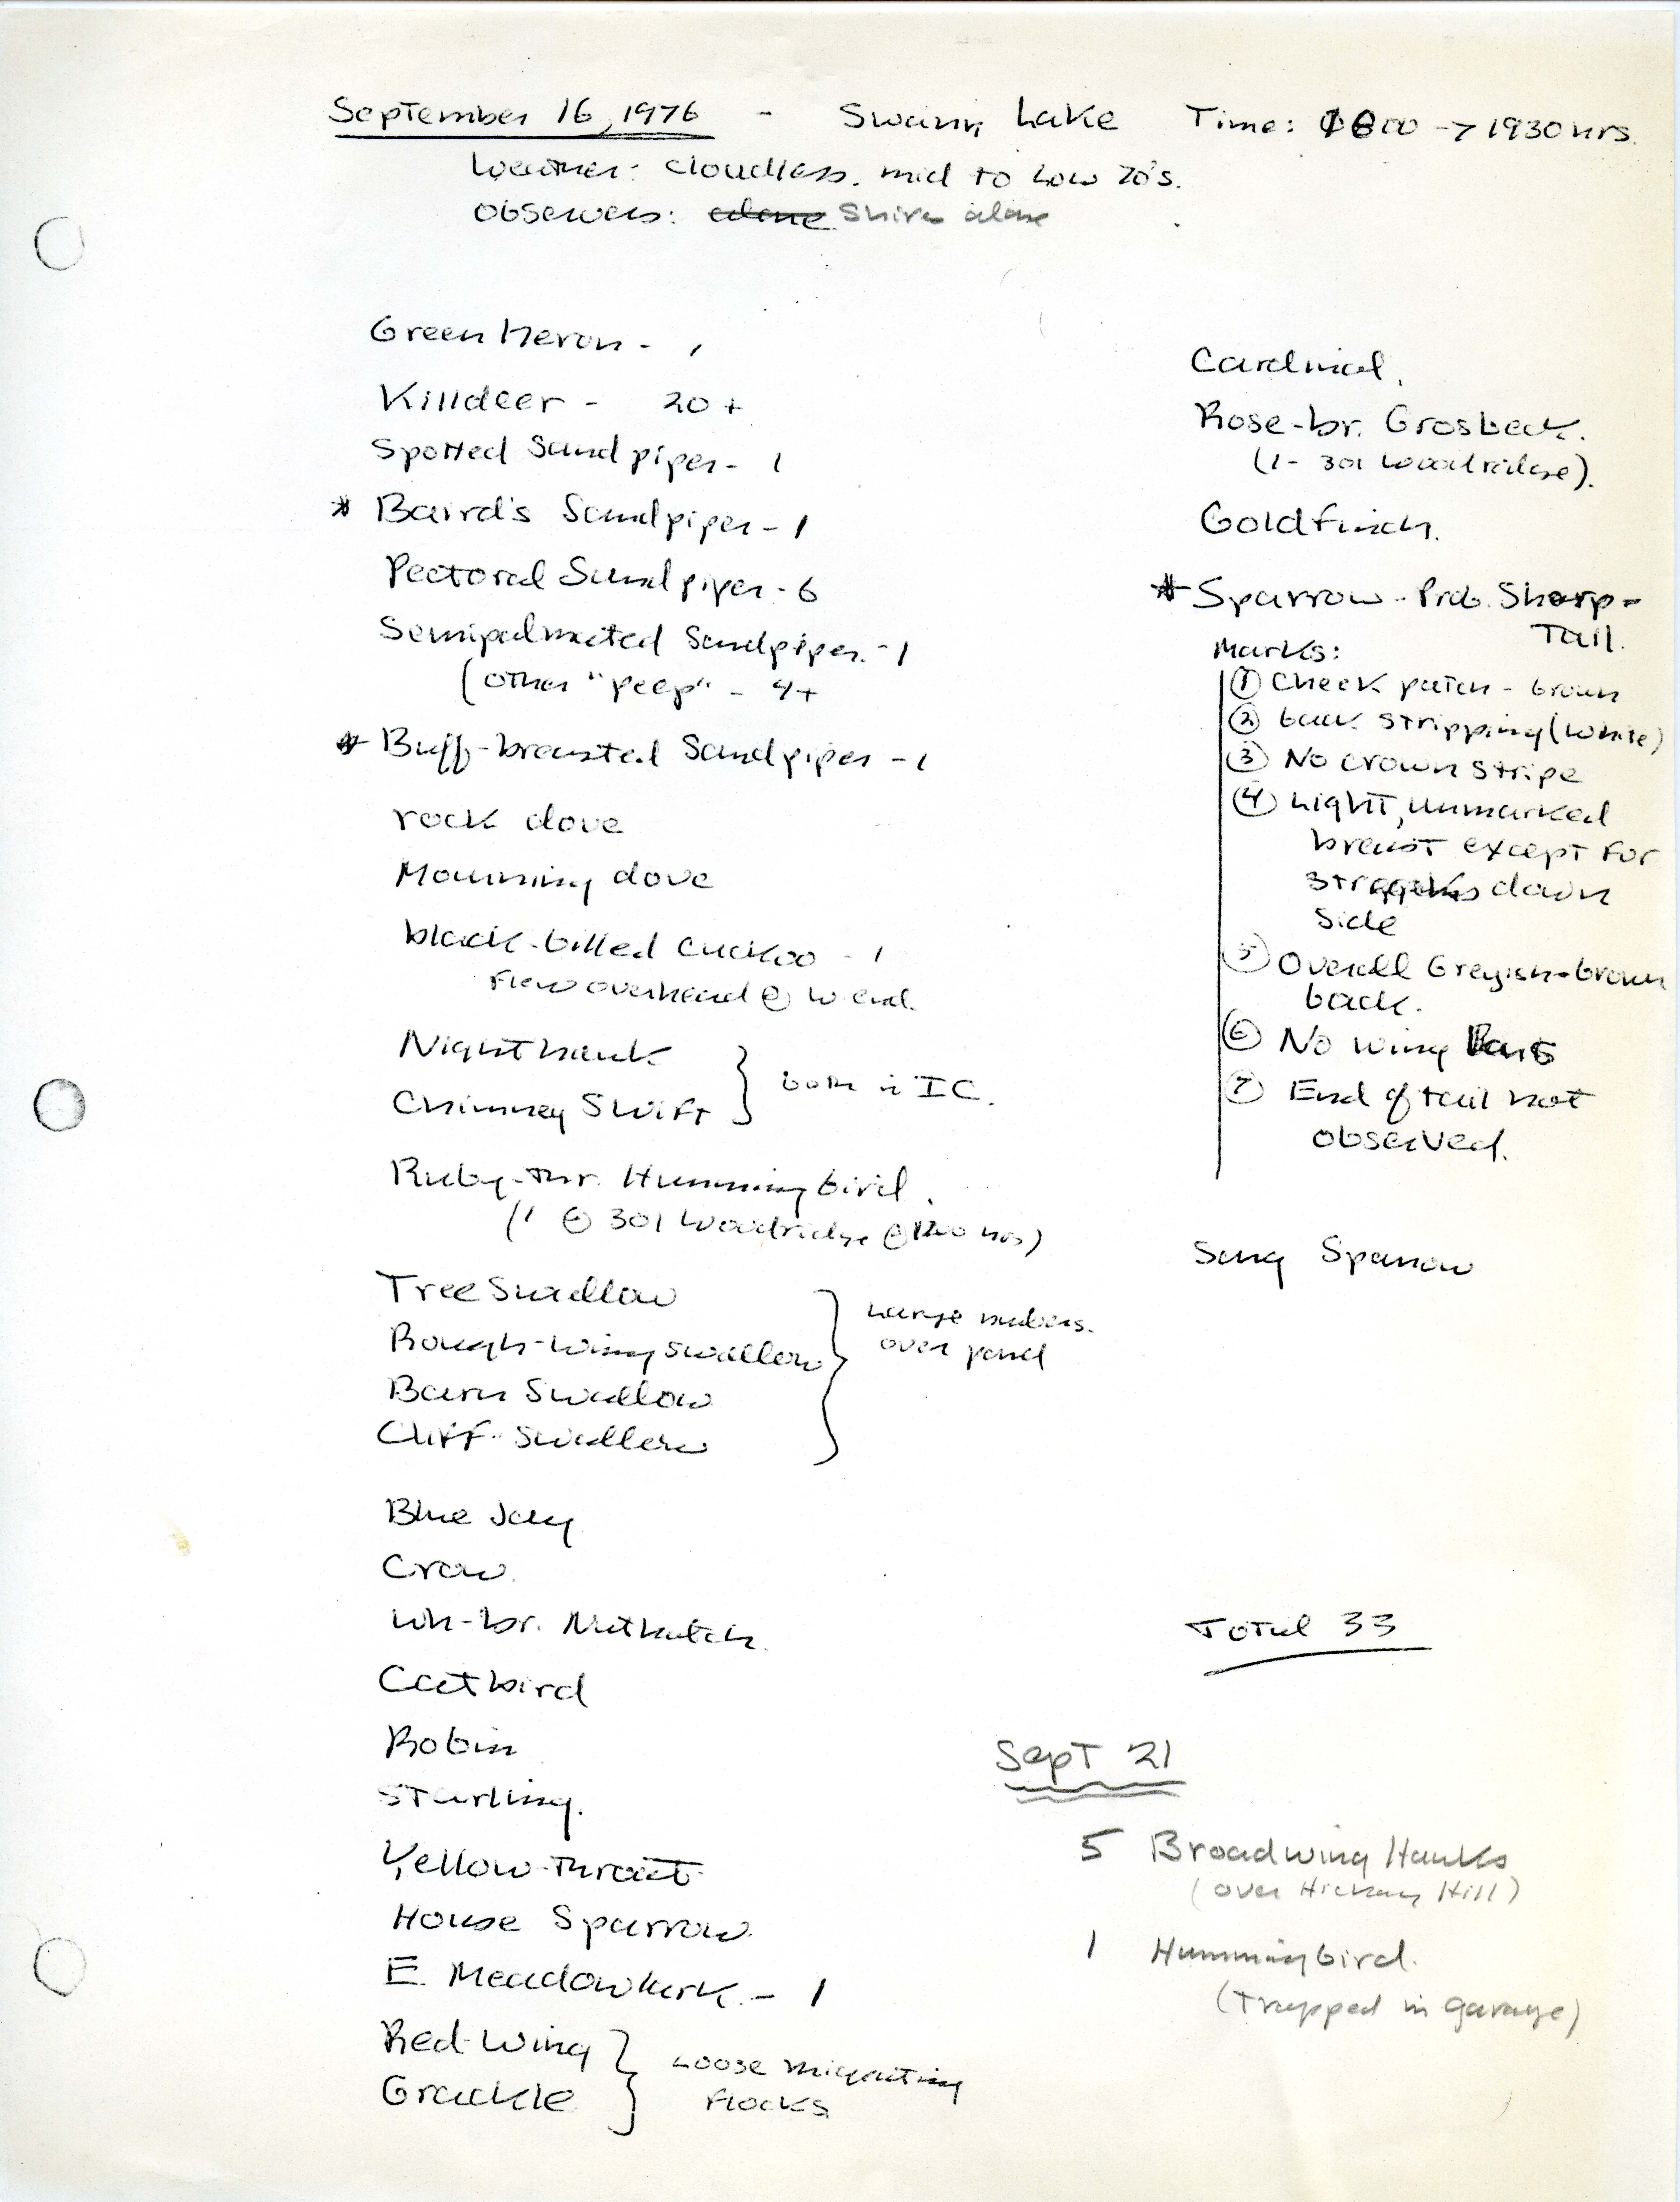 Bird sightings checklist Swan Lake, fall 1976